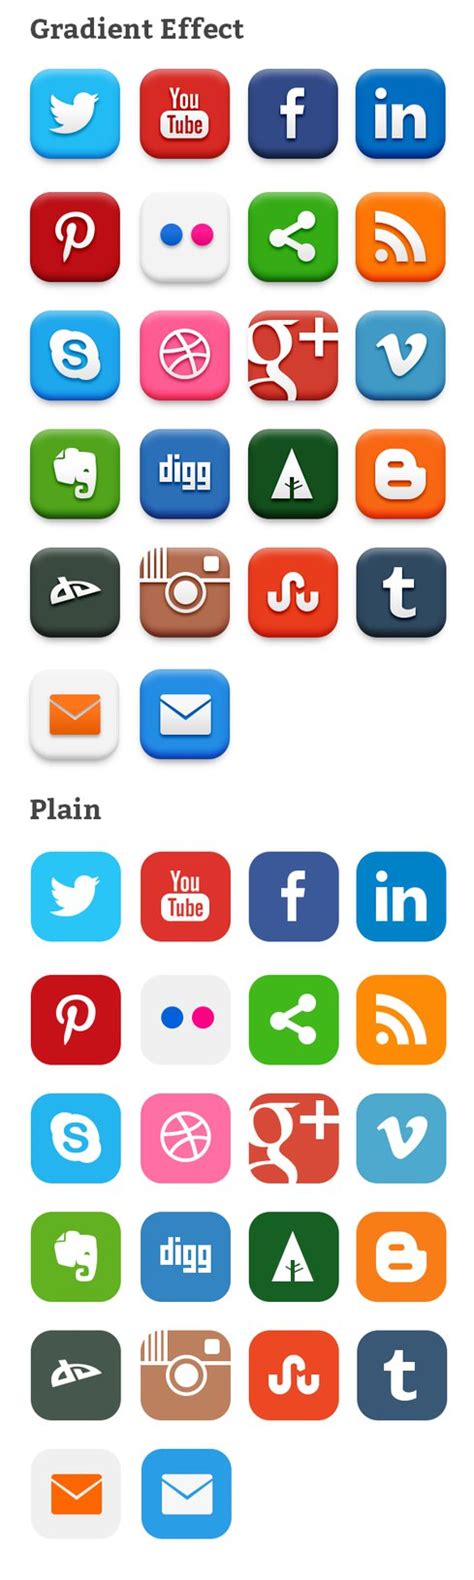 Free 20 Popular Social Media Icons PSD - TitanUI